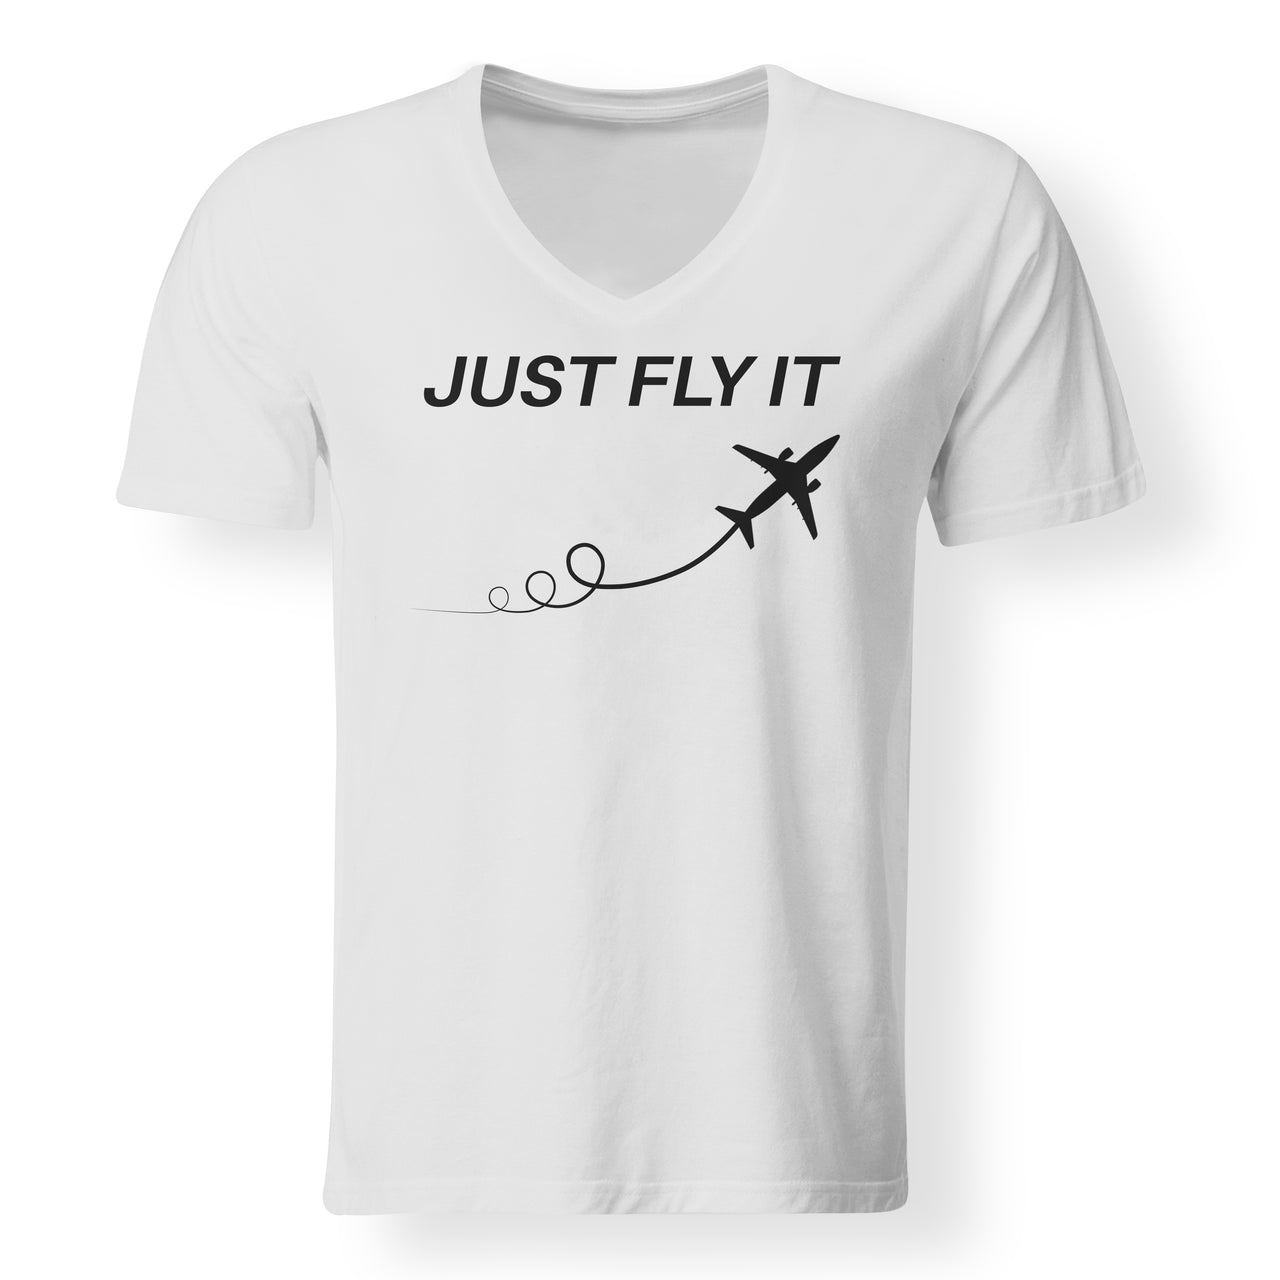 Just Fly It Designed V-Neck T-Shirts